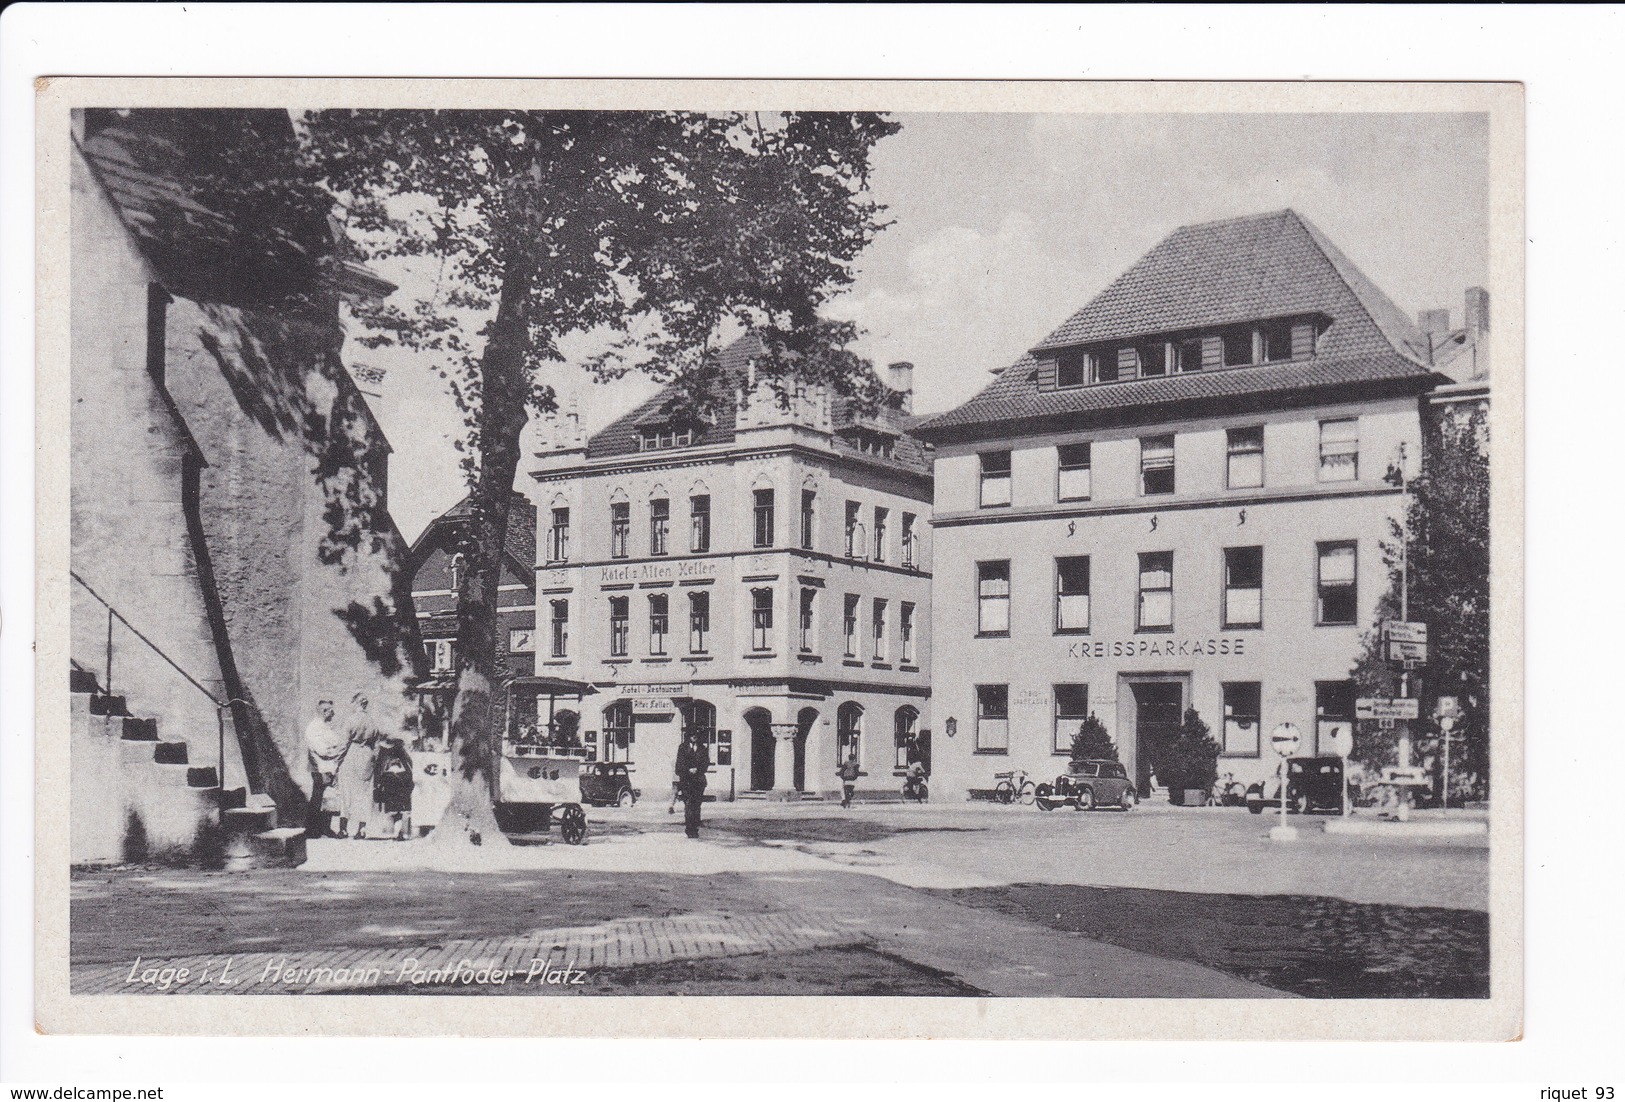 LAGE I. L. Hermann - Pantfoder - Platz - Lage